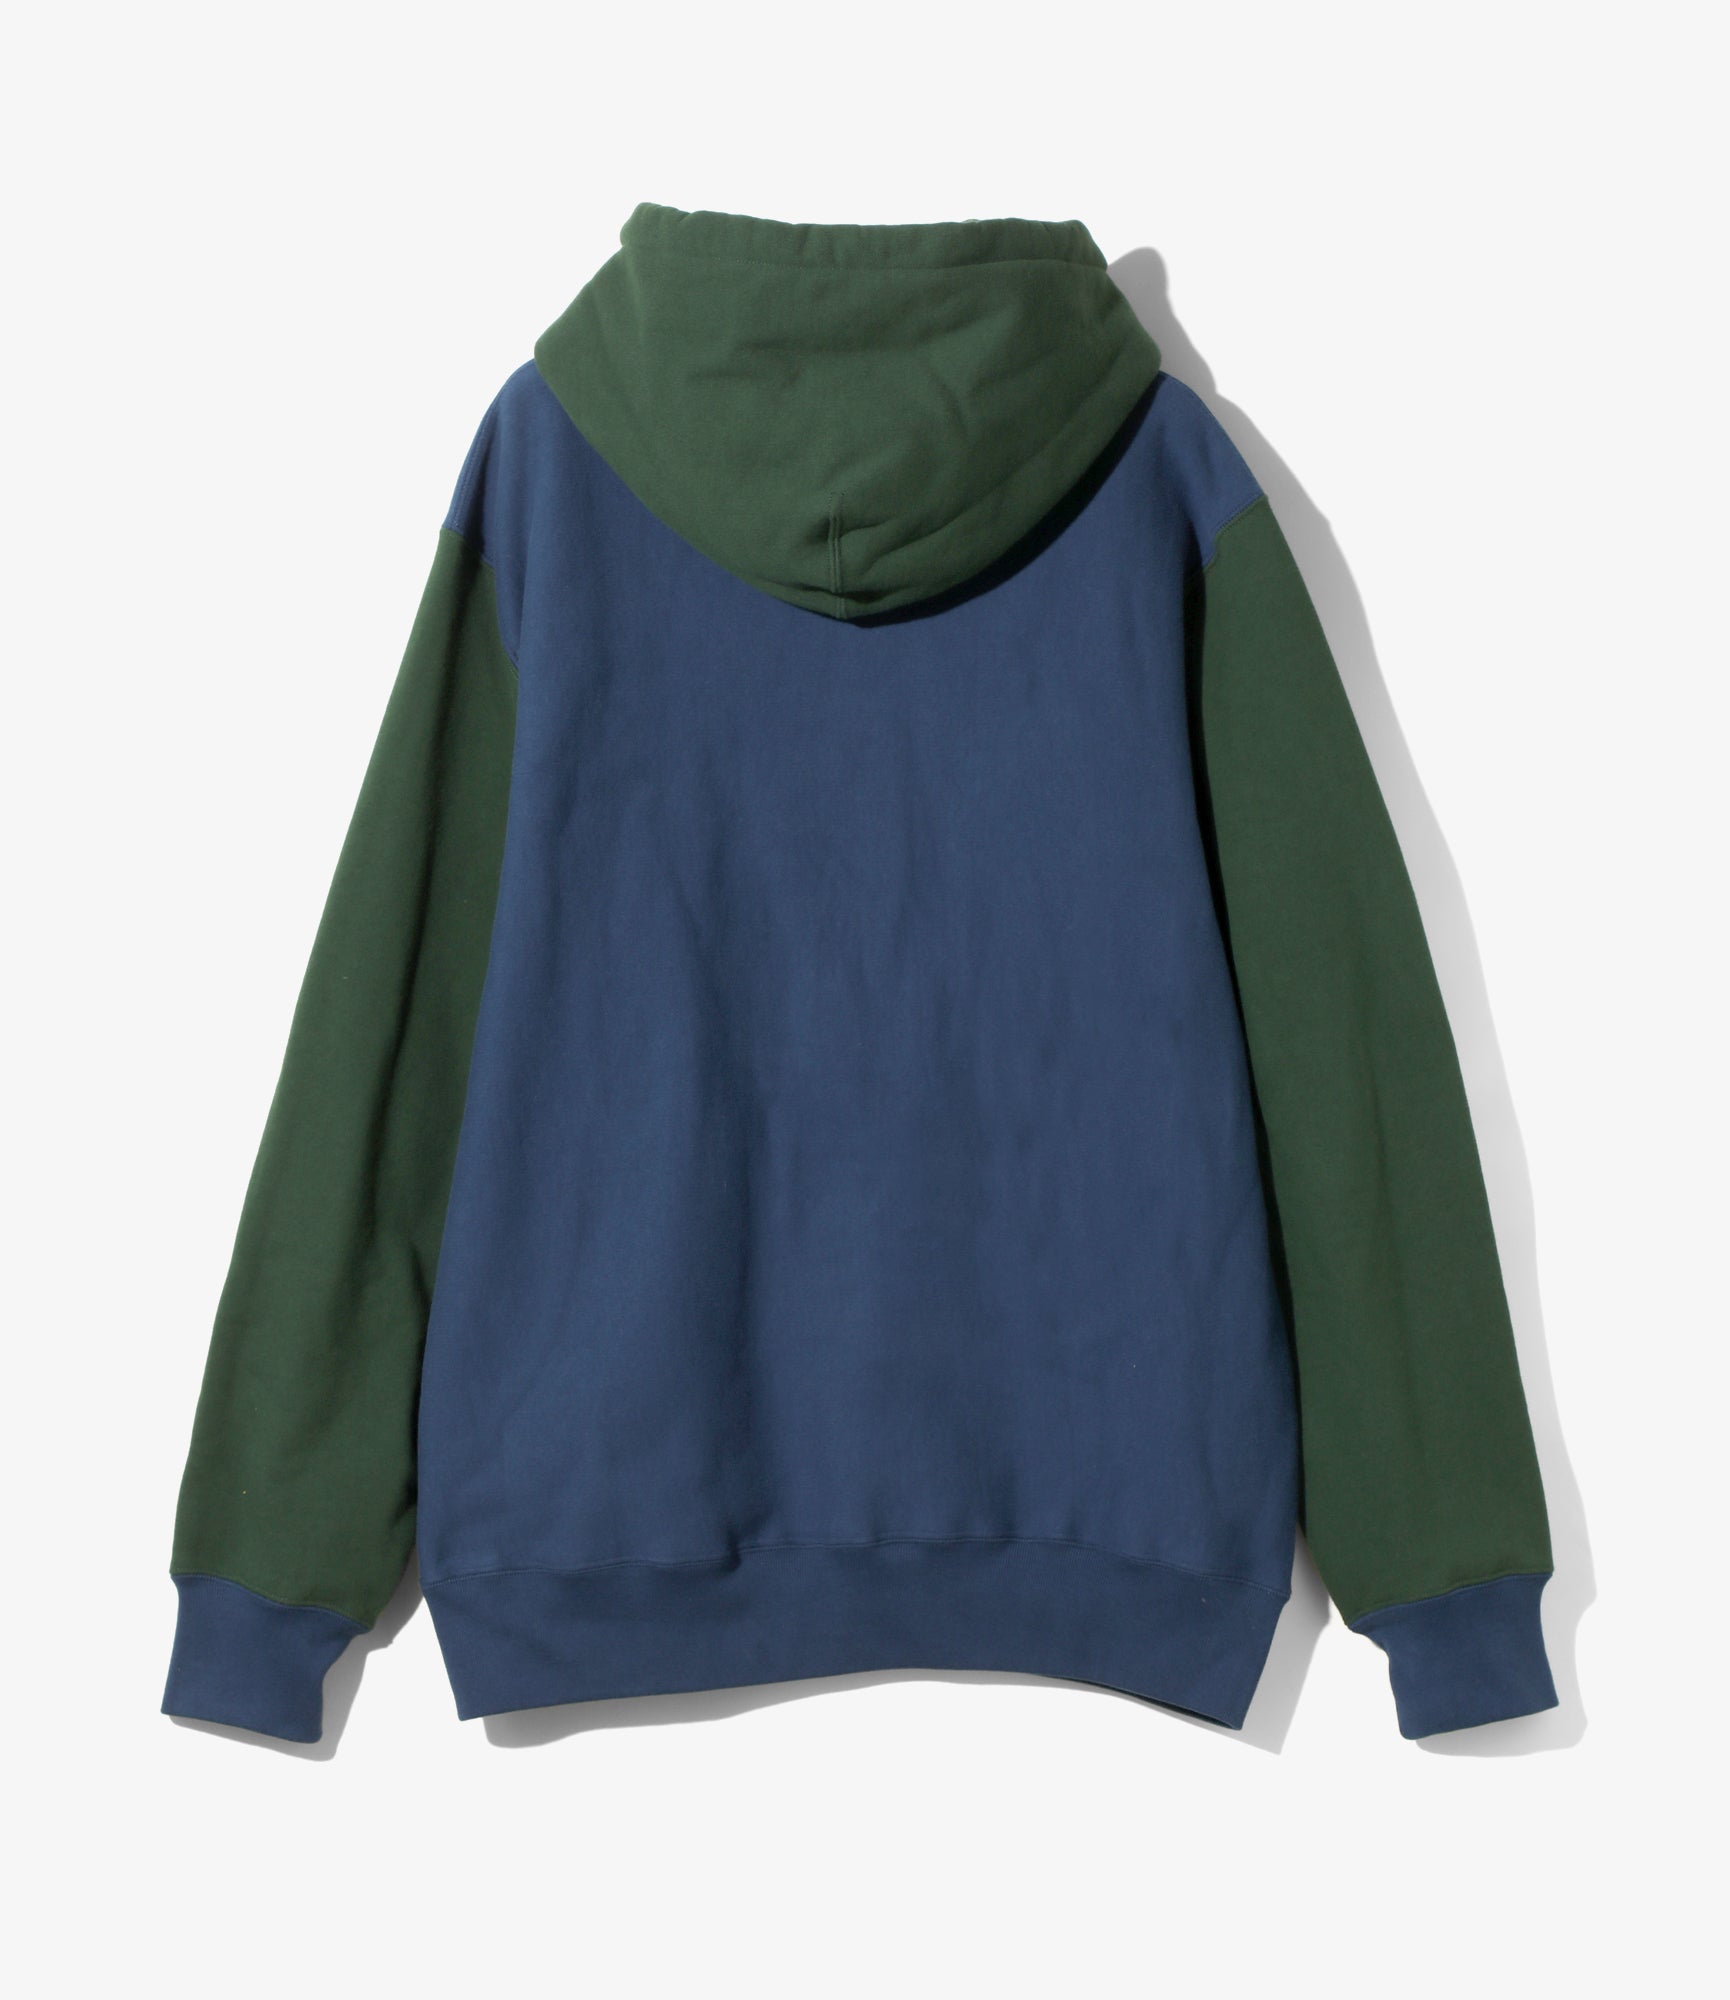 South2 West8 x Better Gift Shop - Hooded Sweatshirt - Dk. Blue / Forest  Green